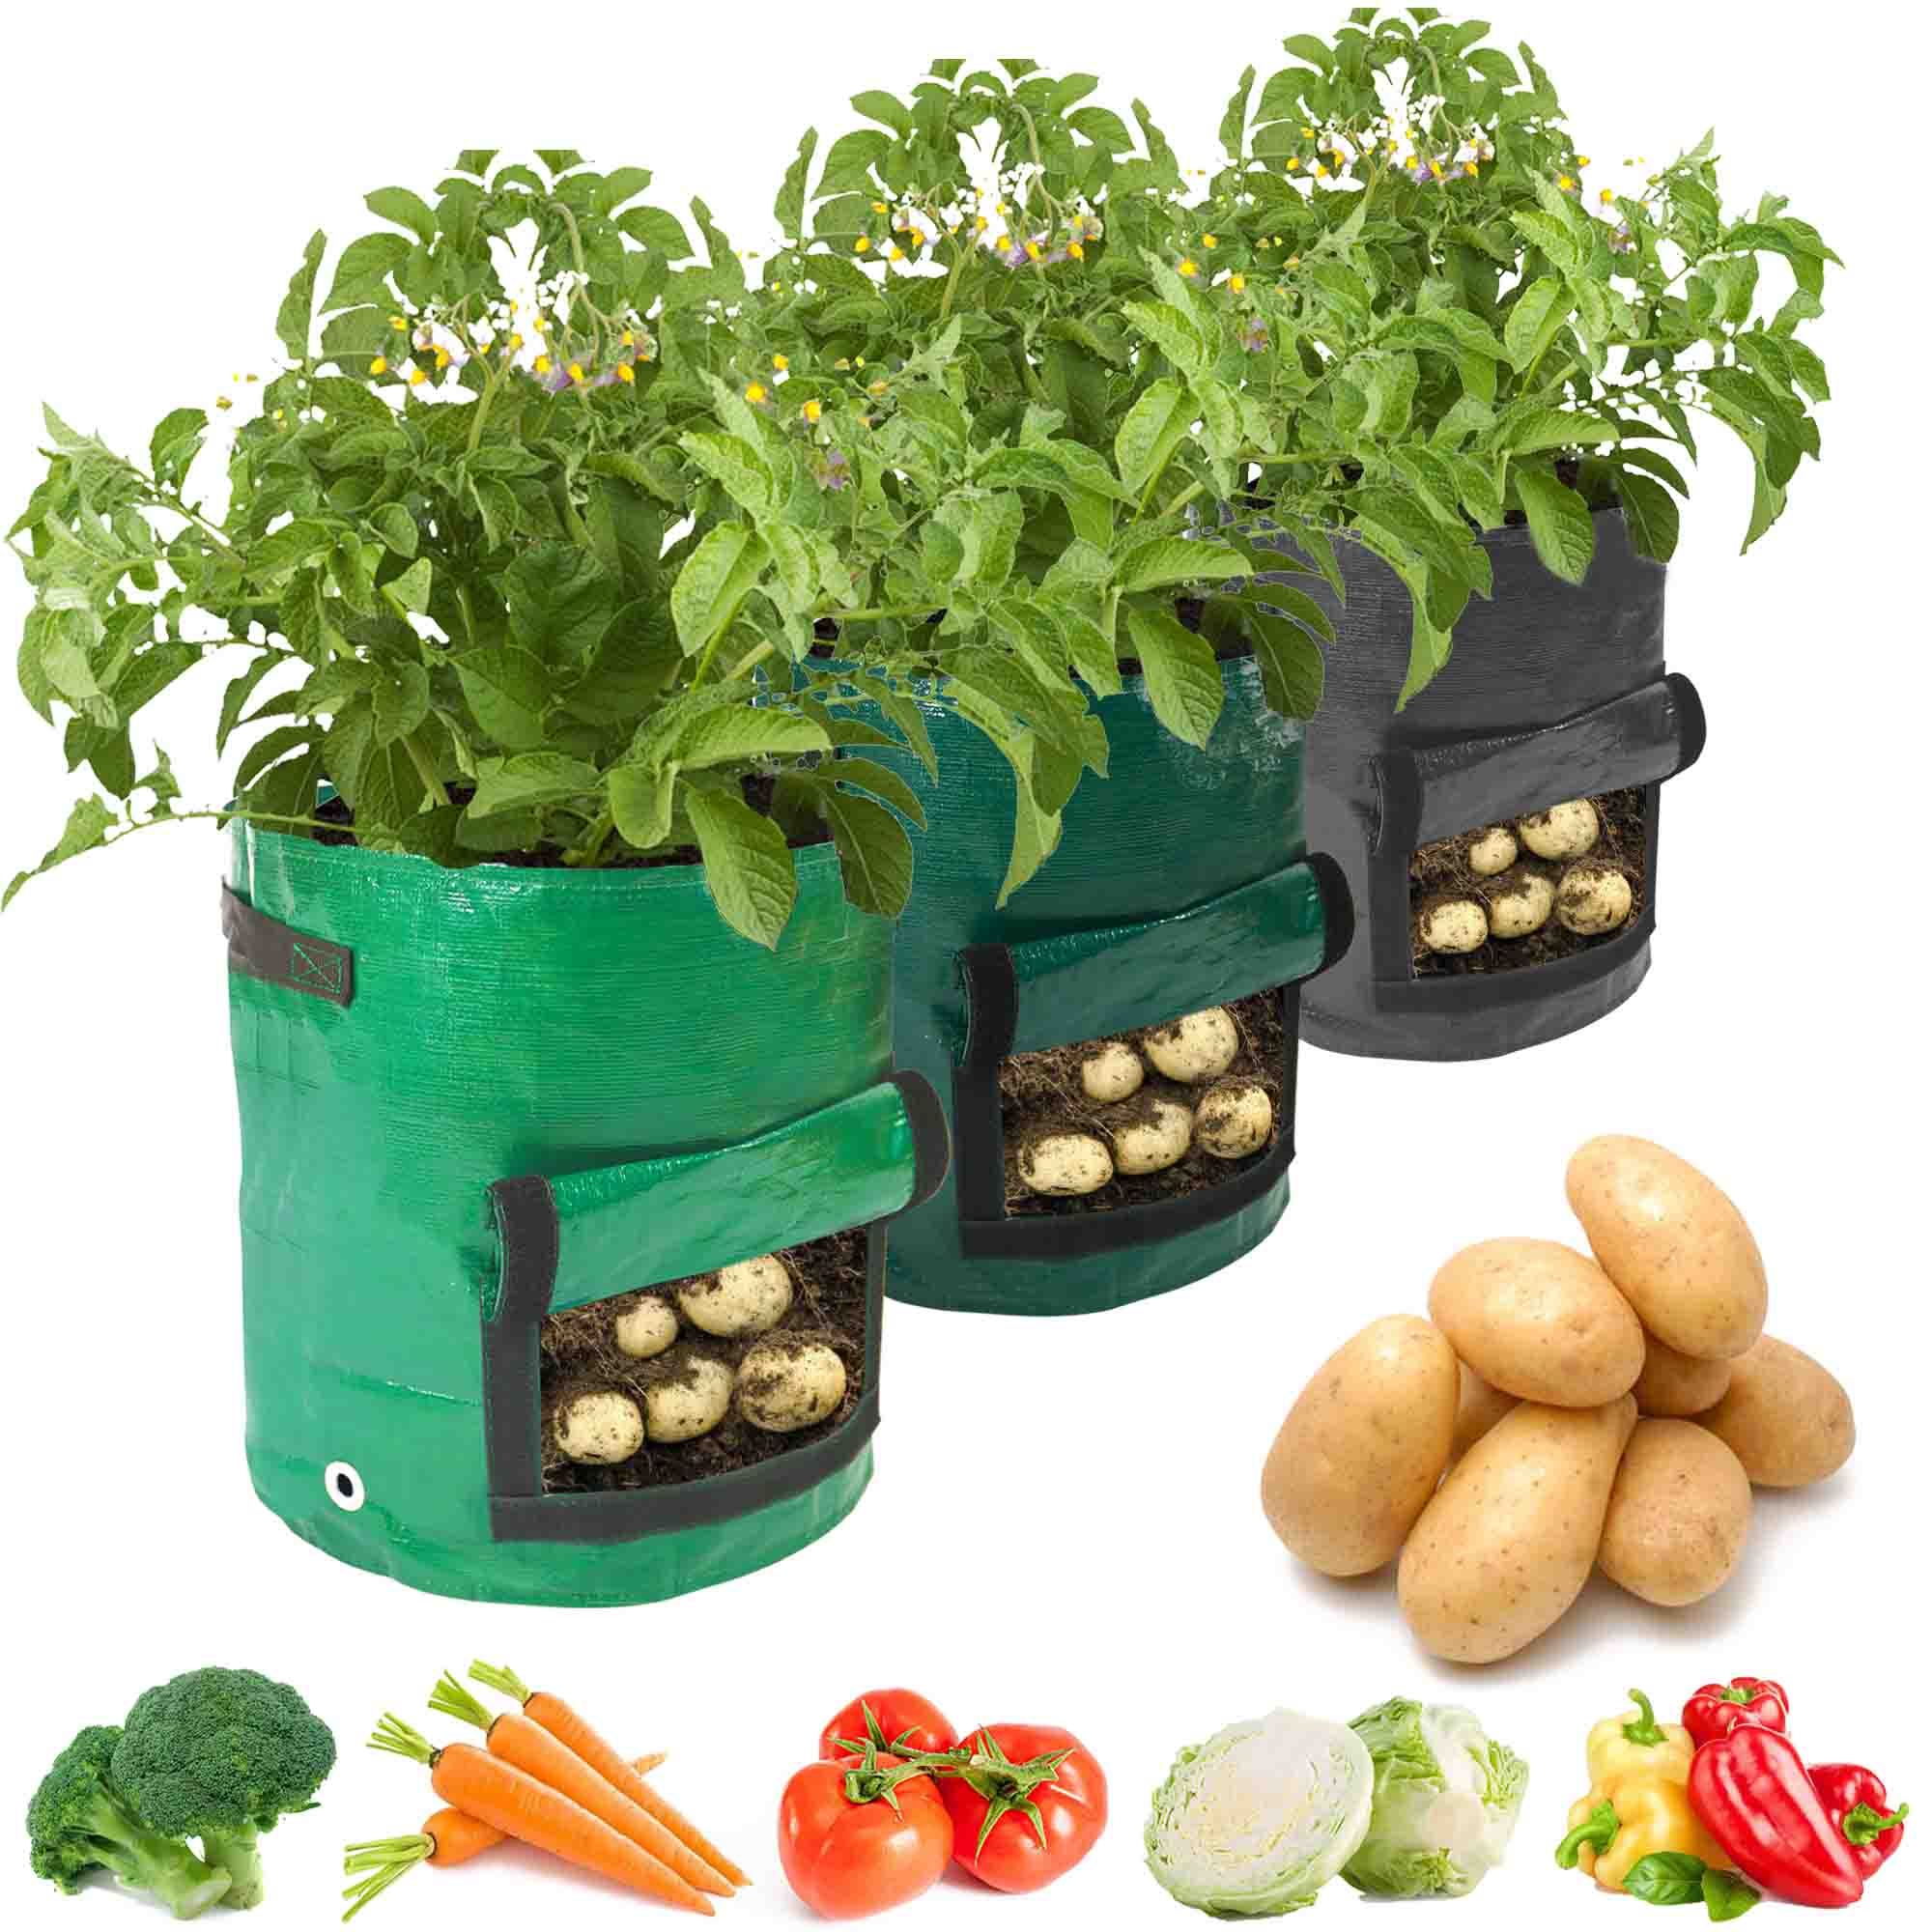 Garden Potato Grow Bag Vegetables Planter Bags with Handles and